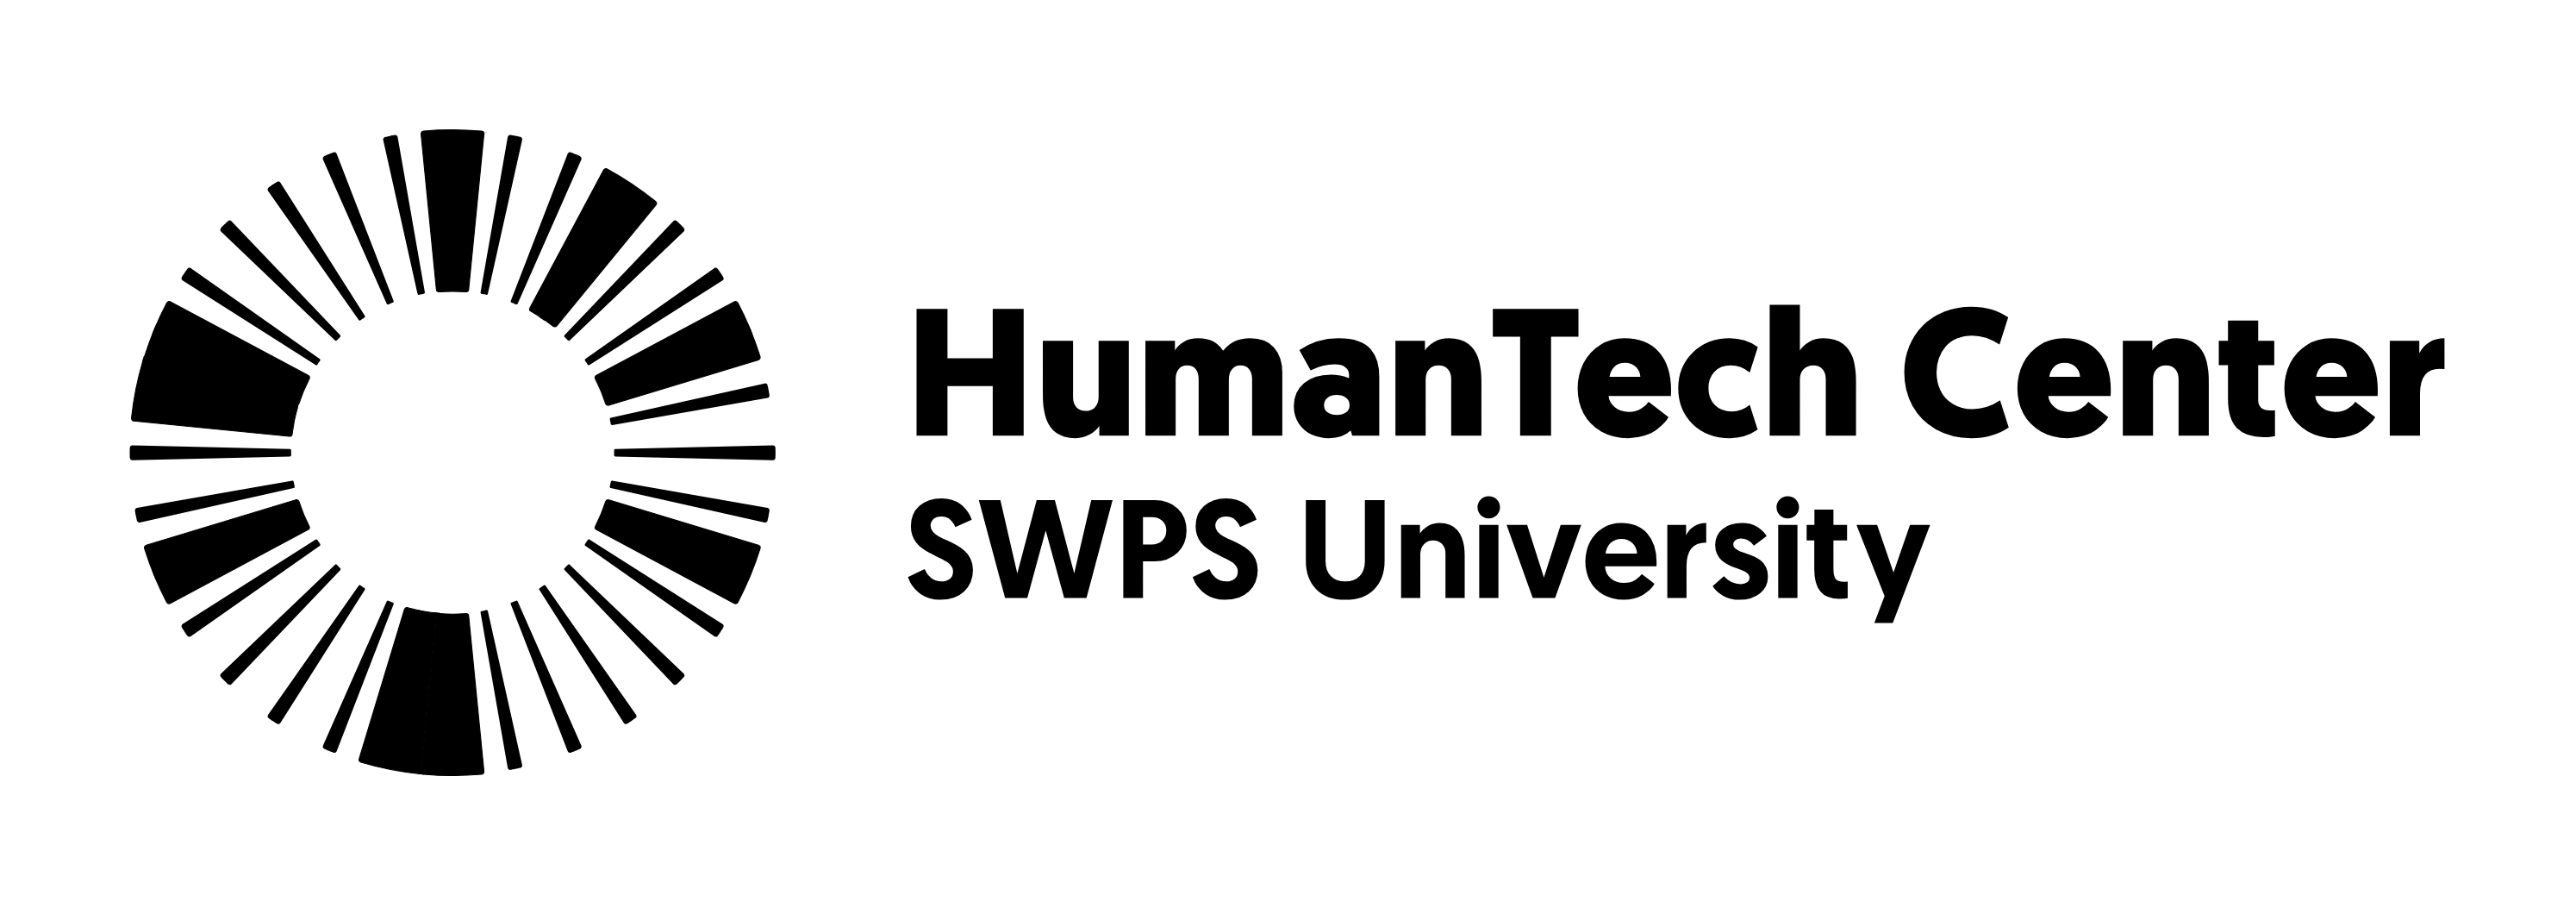 Logo, HumanTech Center, SWPS University